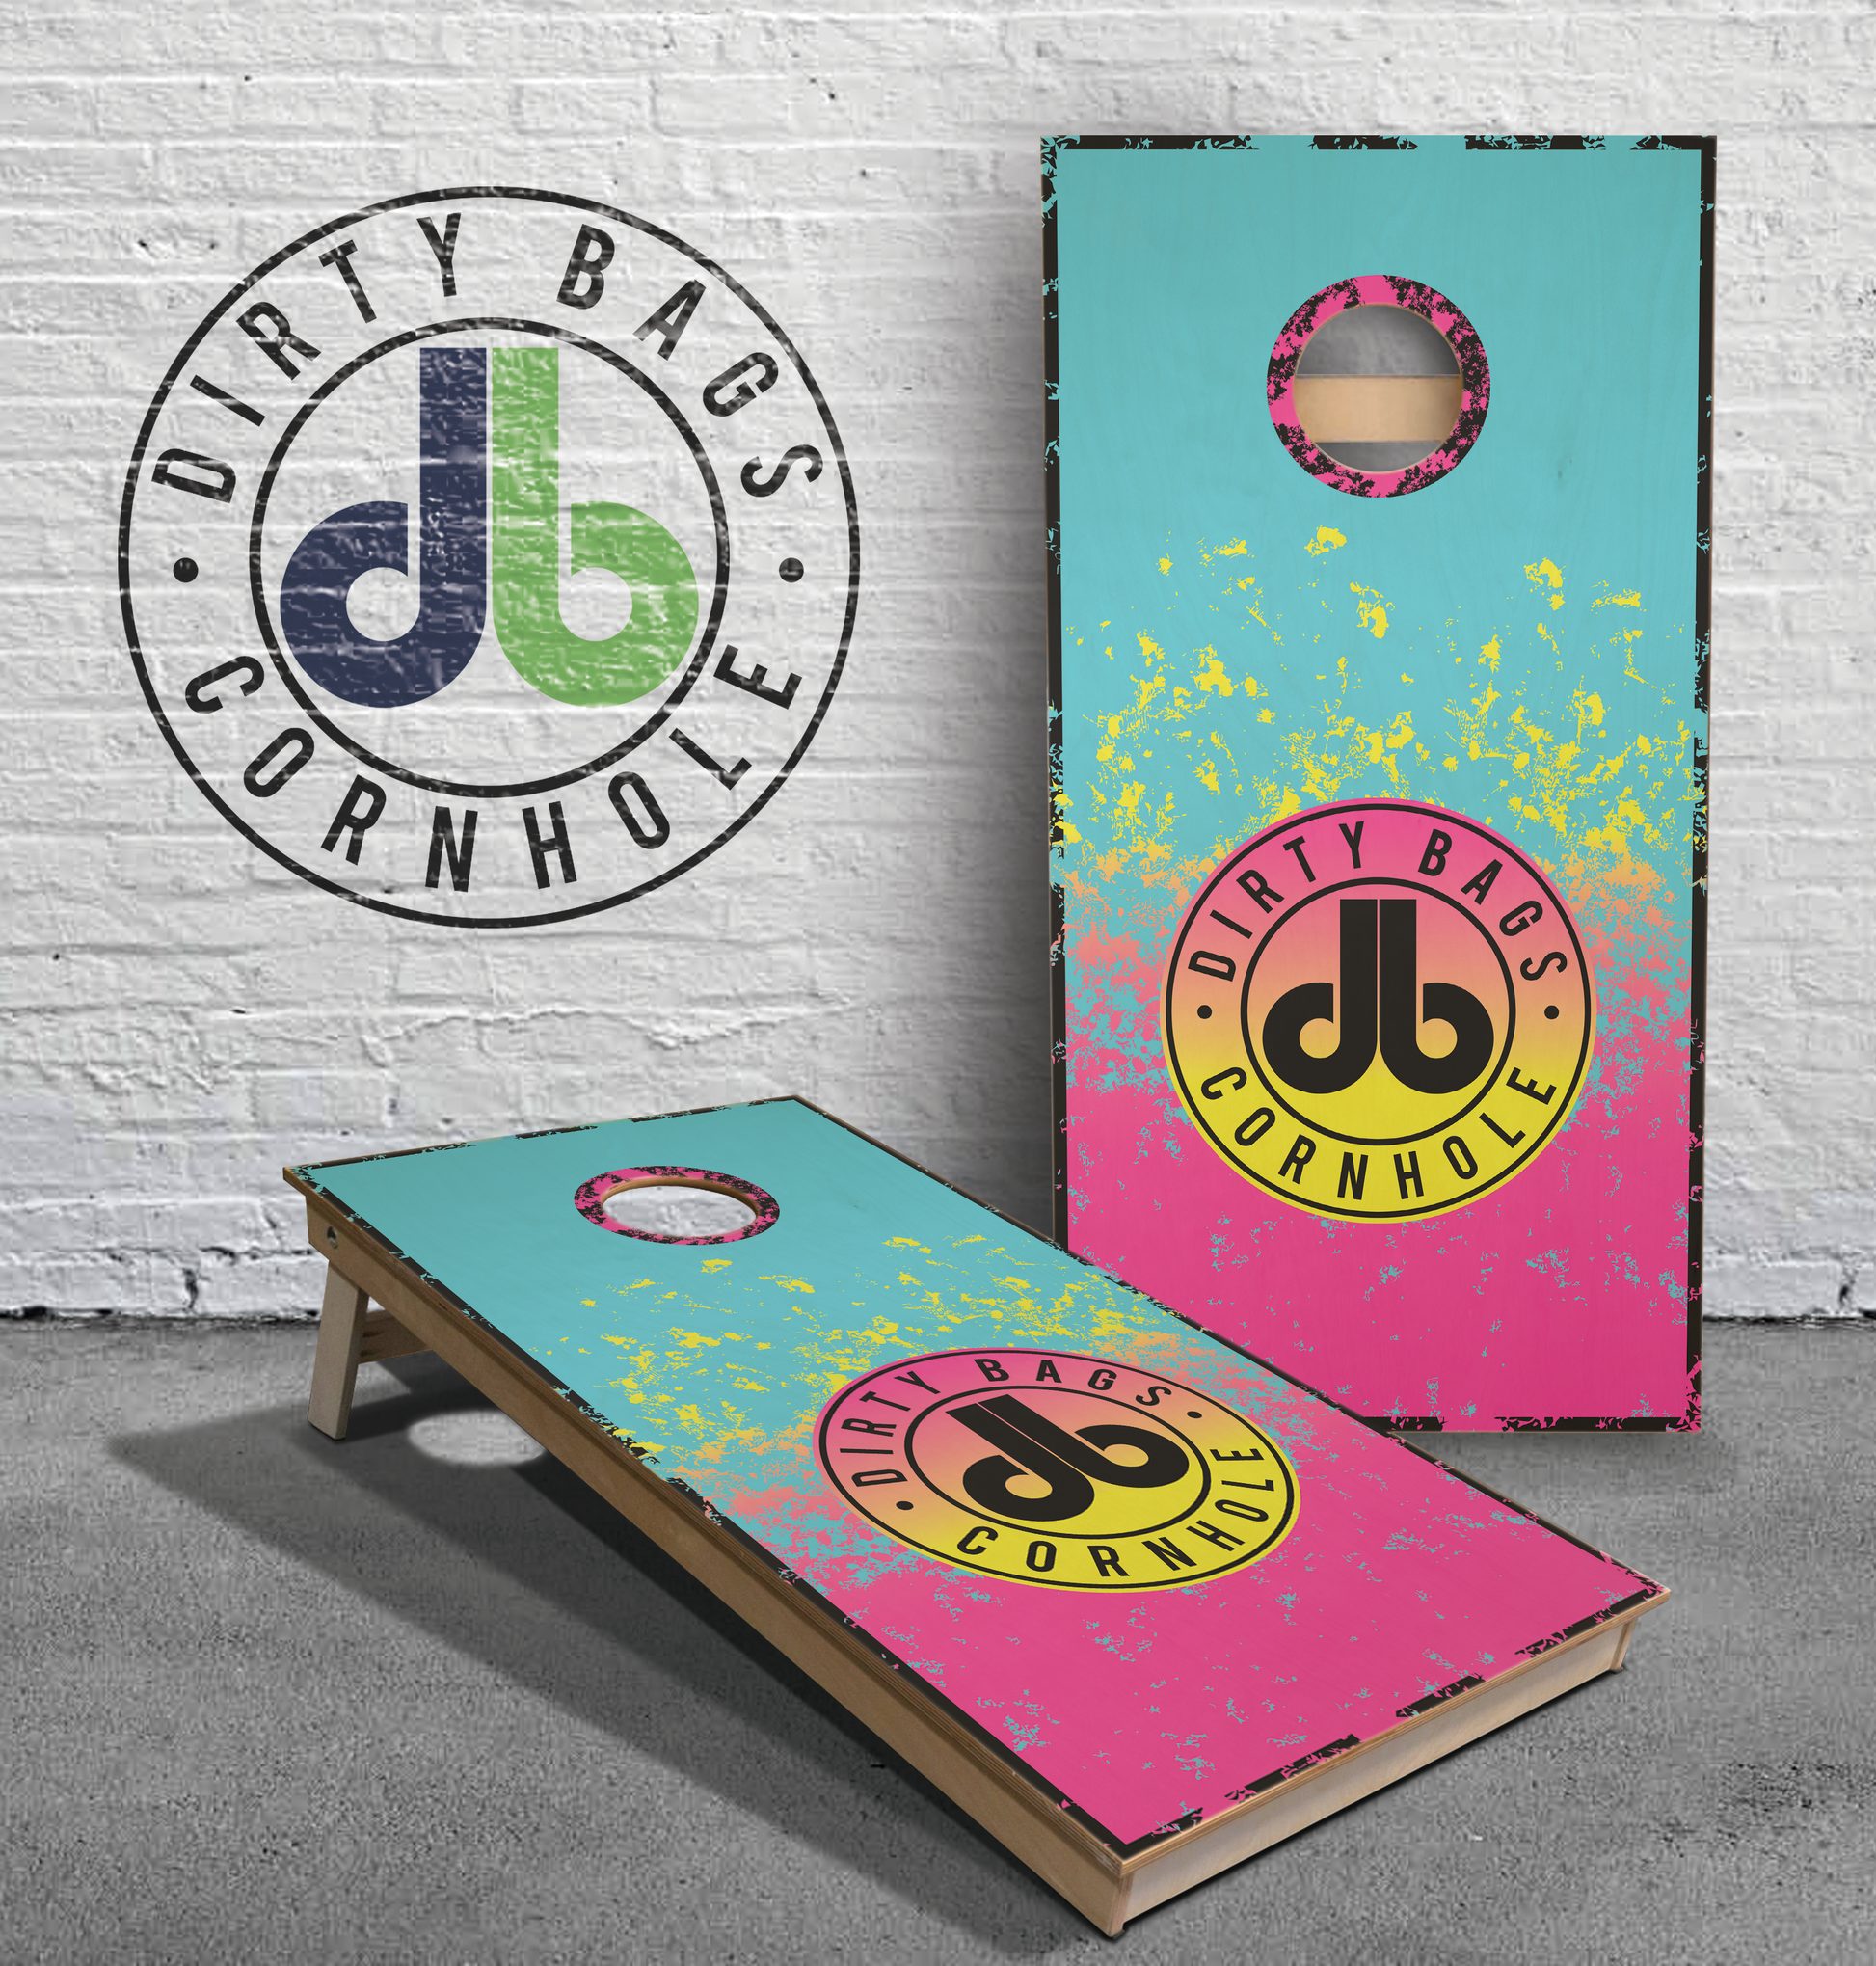 Cornhole Boards - Miami Vice Dirty Bags Edition